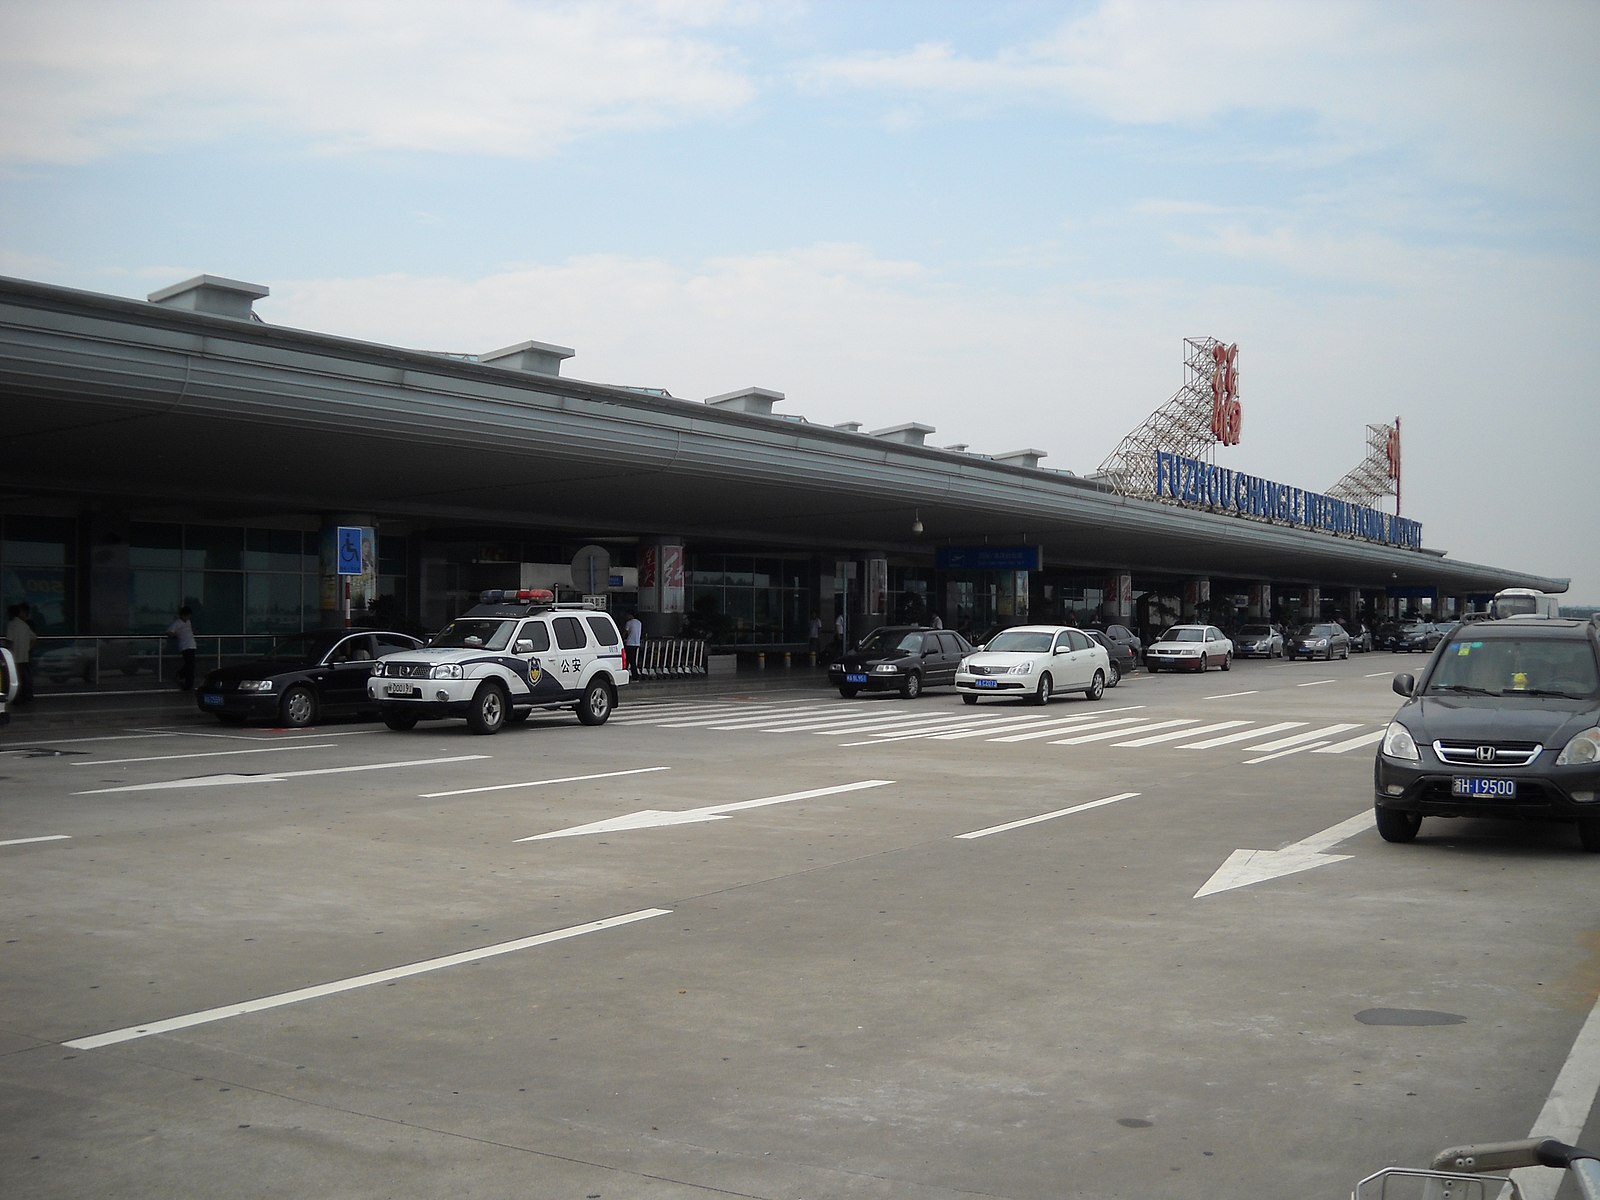 Fuzhou Changle International Airport is the main airport serving Fuzhou city in China.